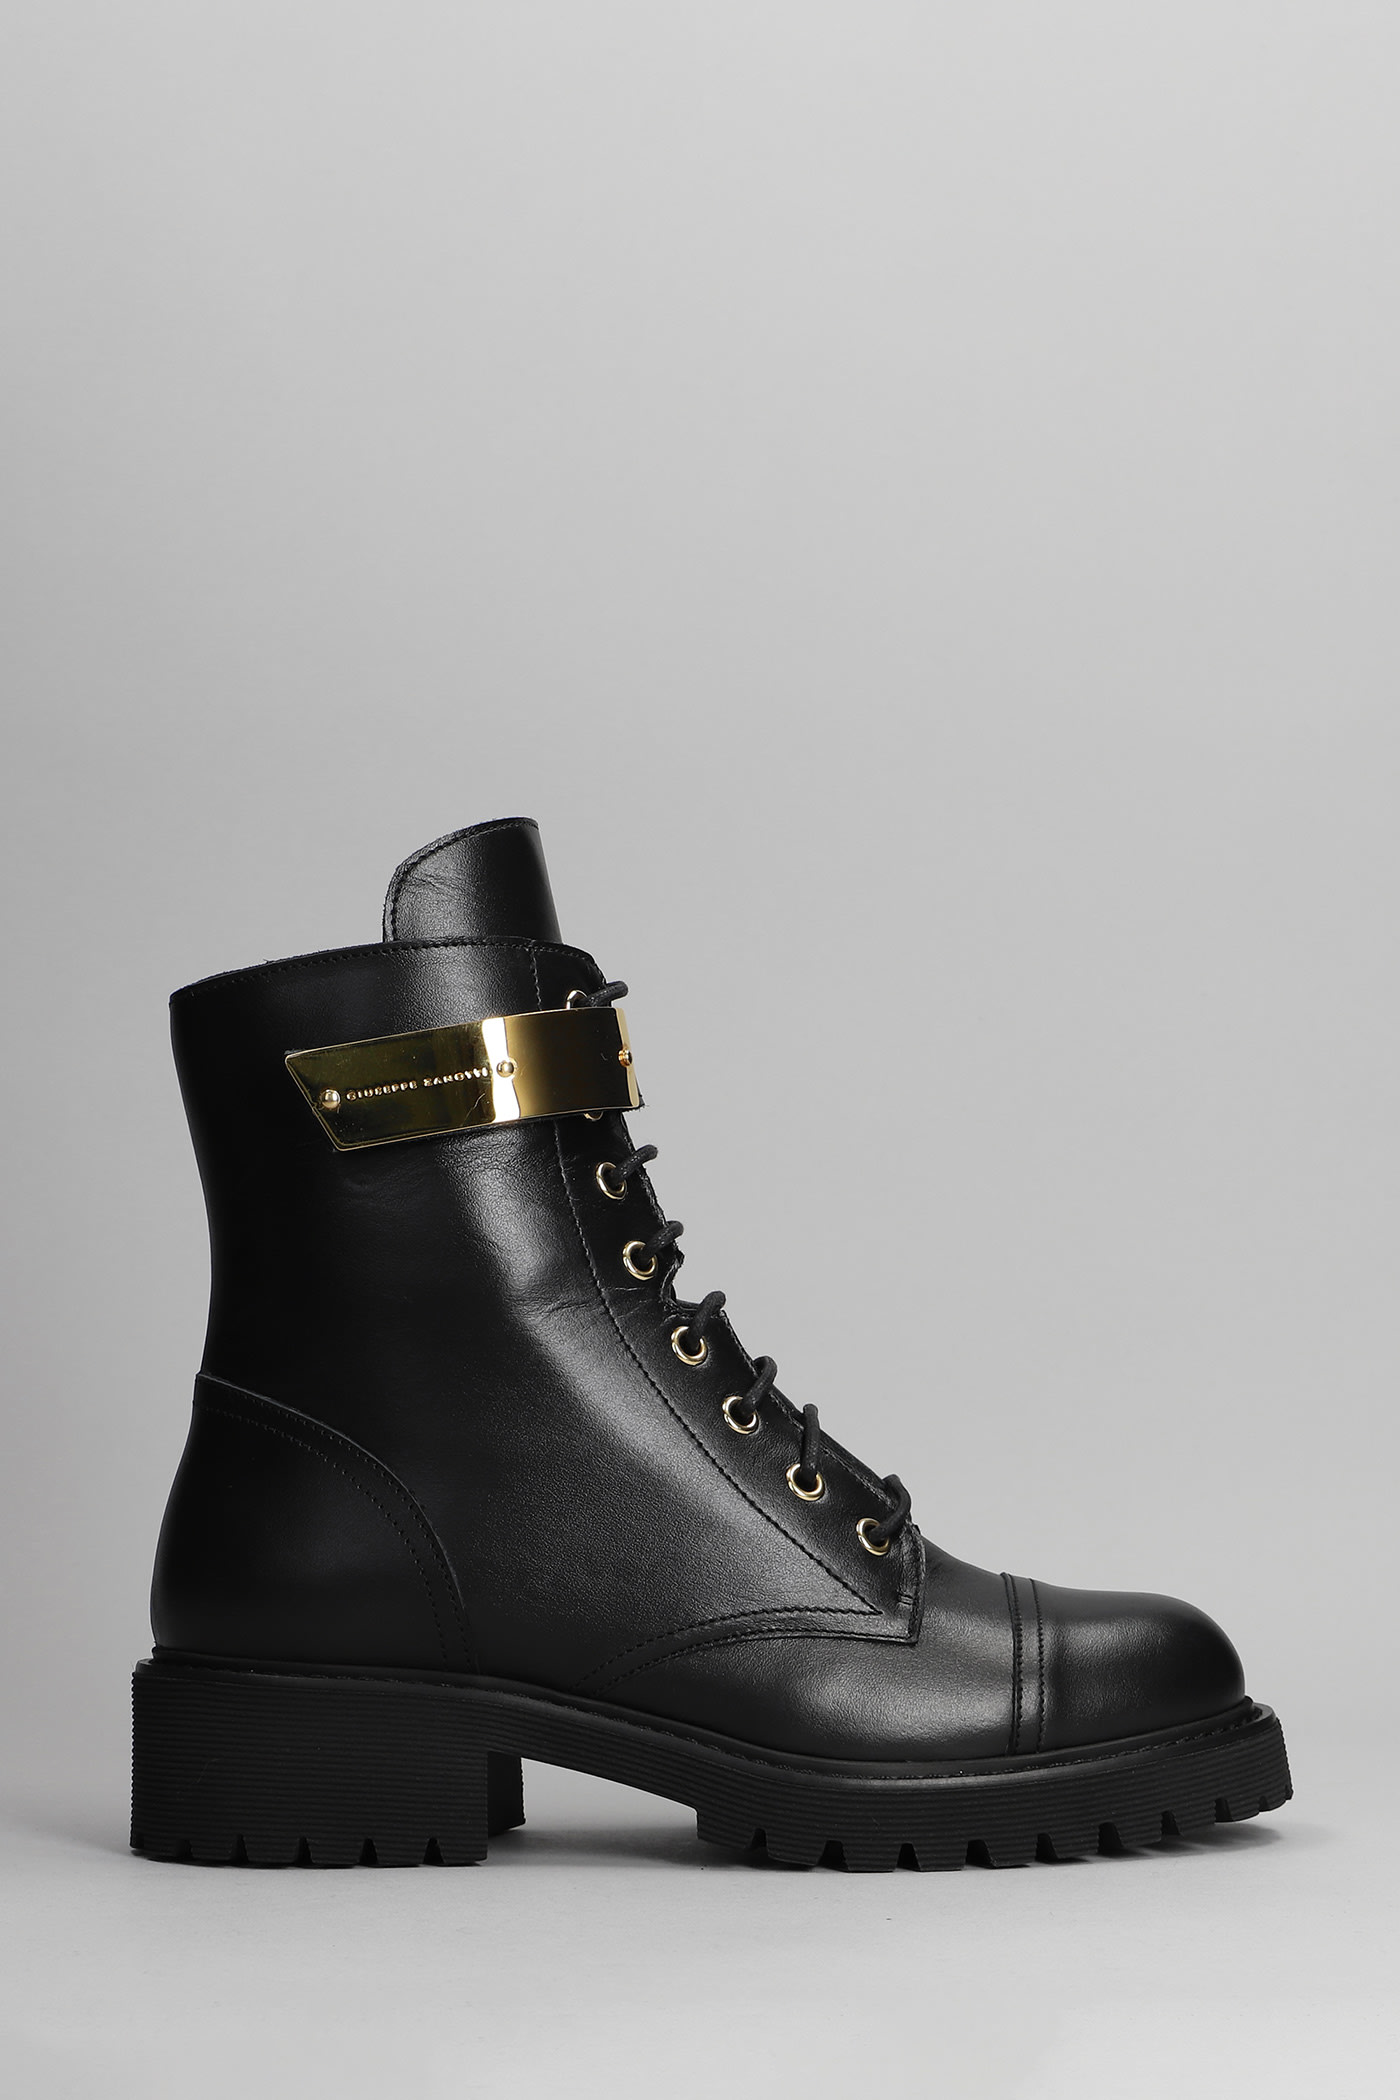 Giuseppe Zanotti Alexa Combat Boots In Black Leather